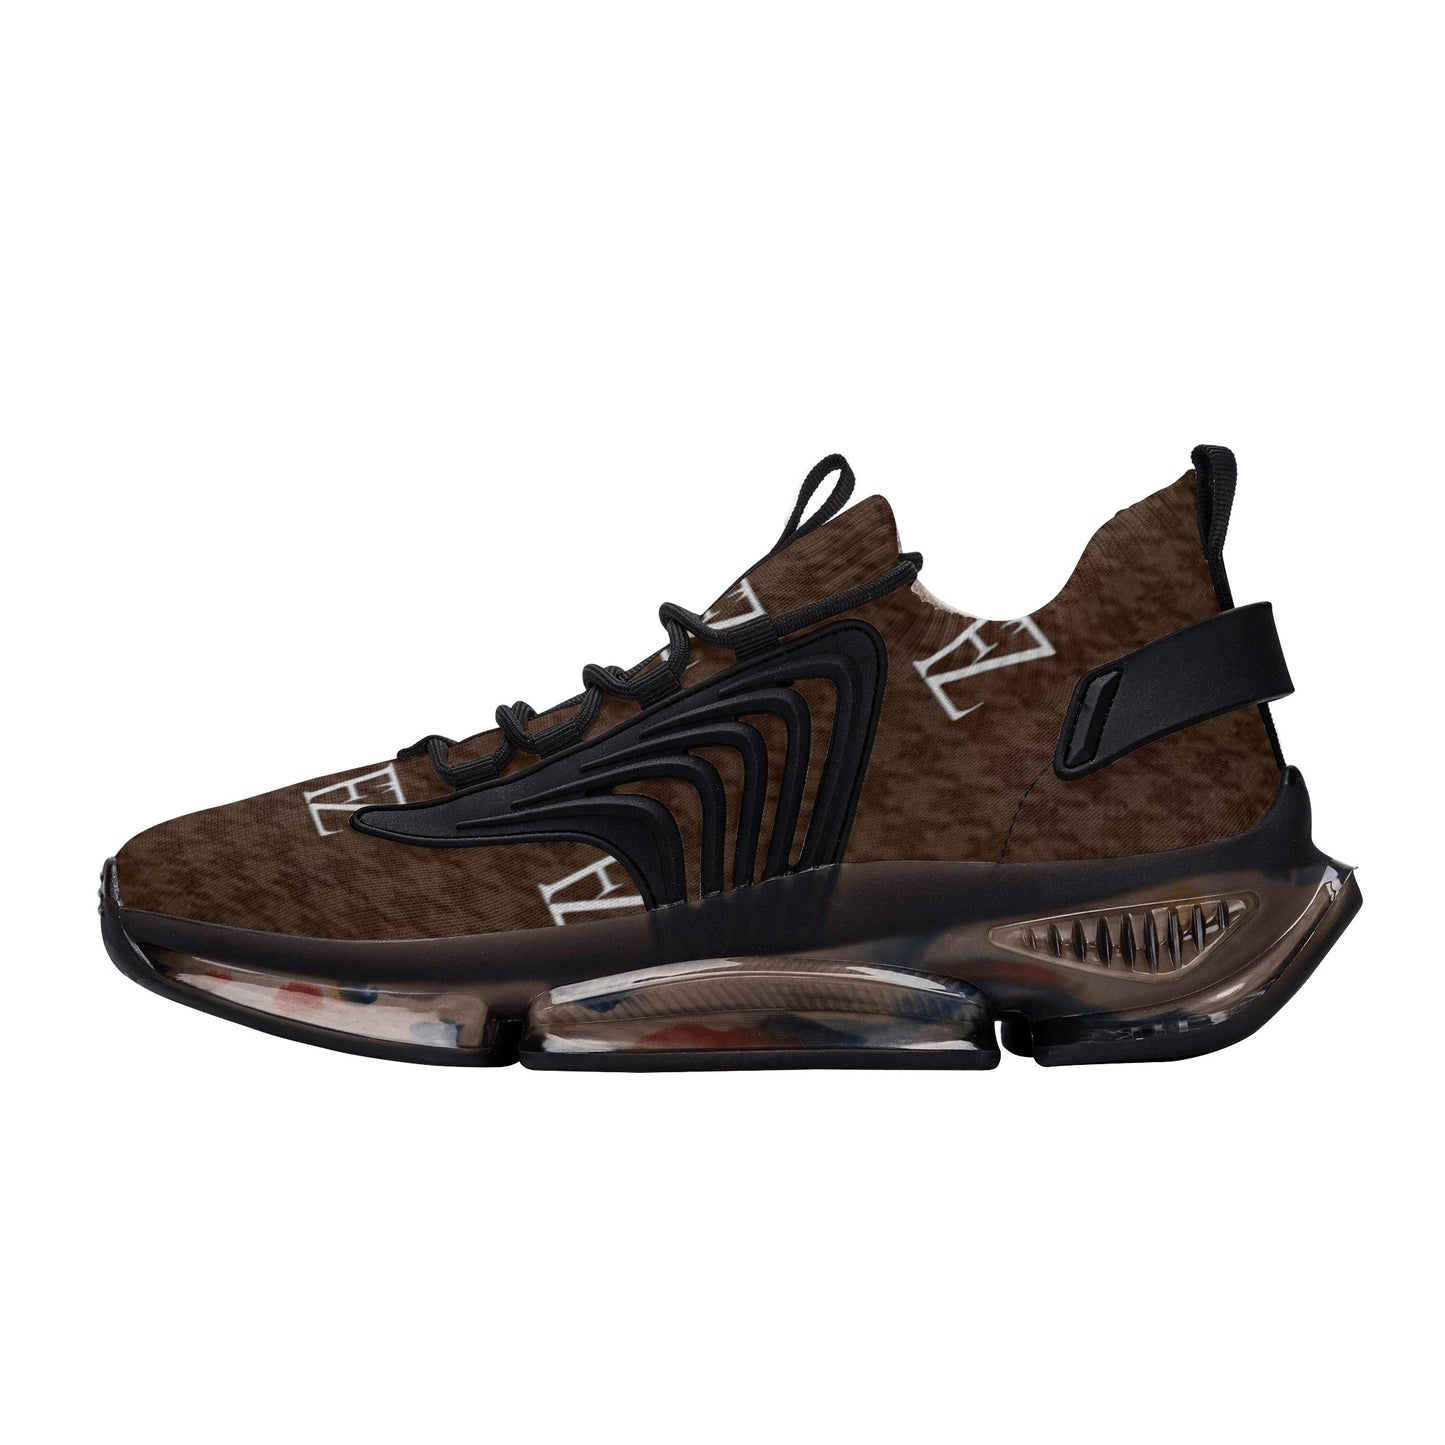 FZ Men's Air Heel React Sneakers